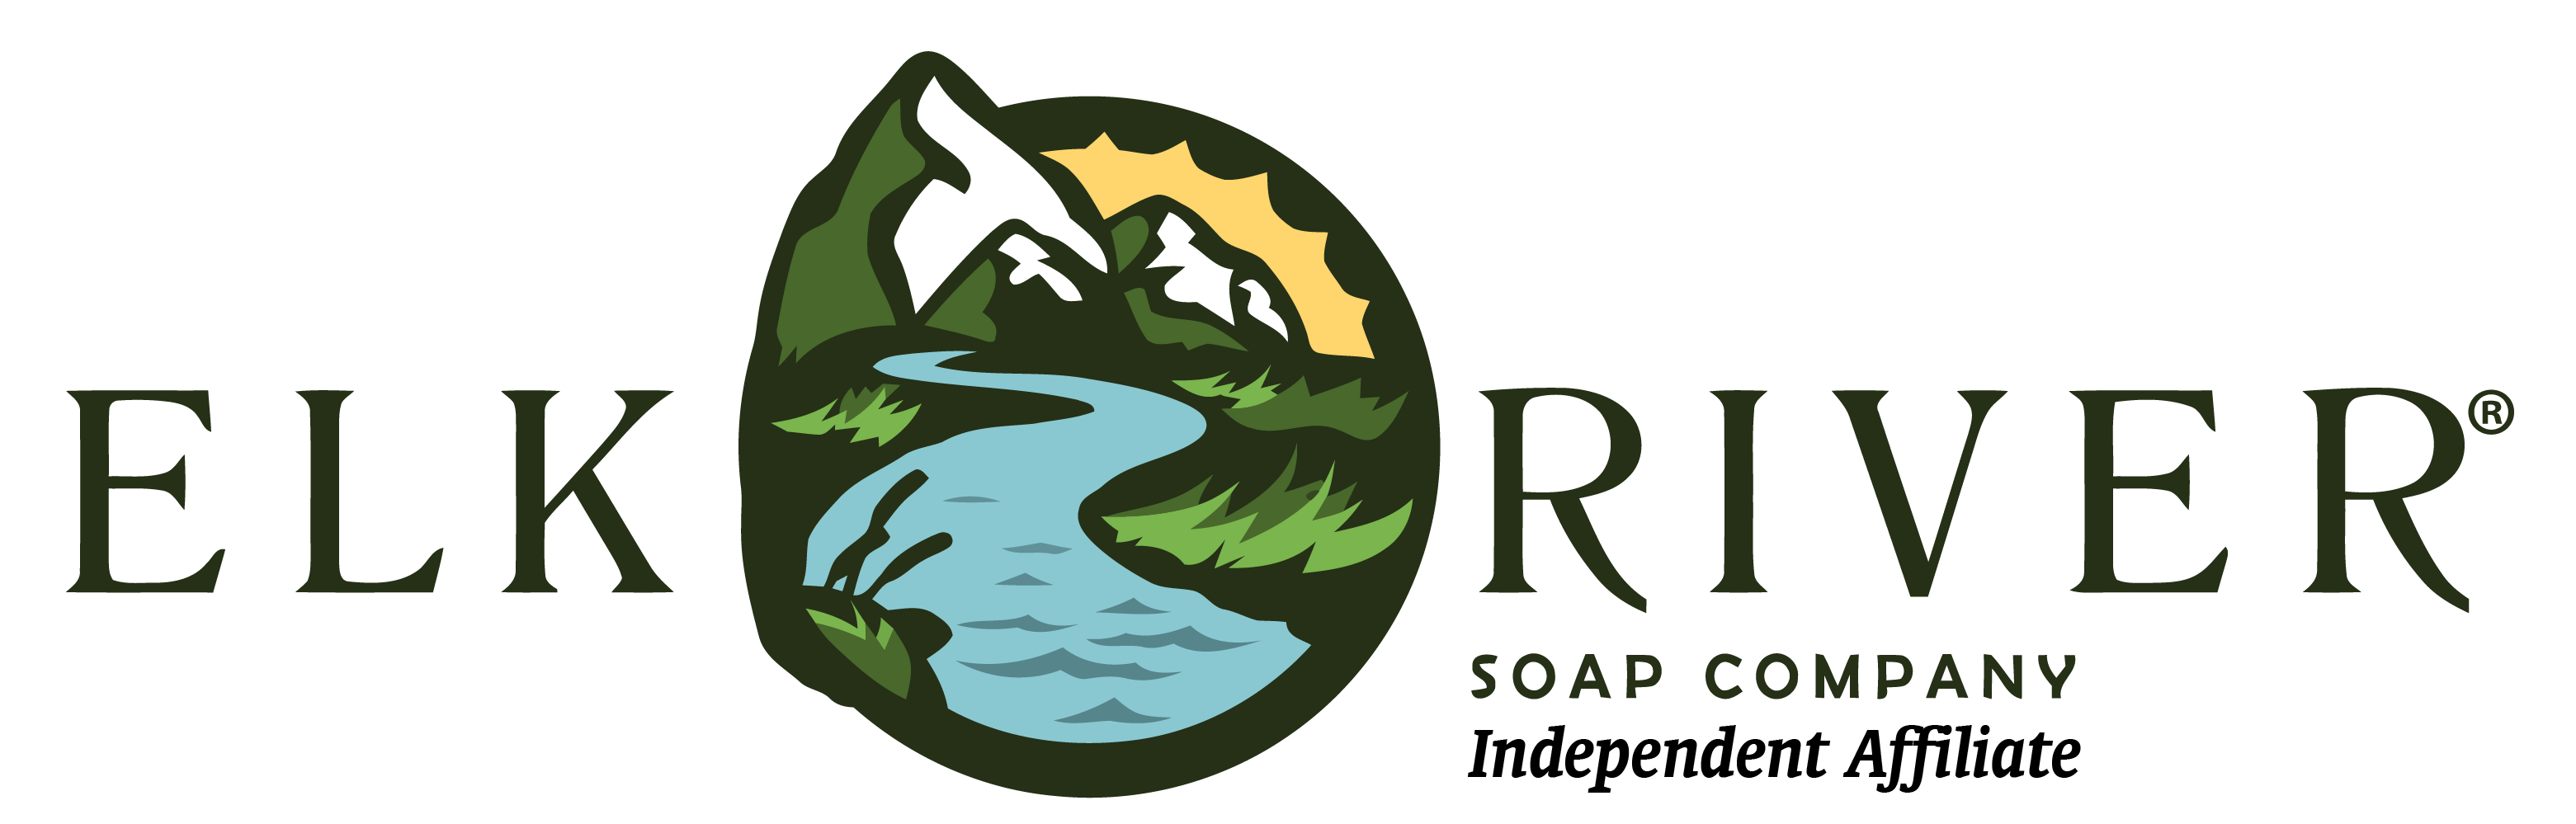 Soap bath soap